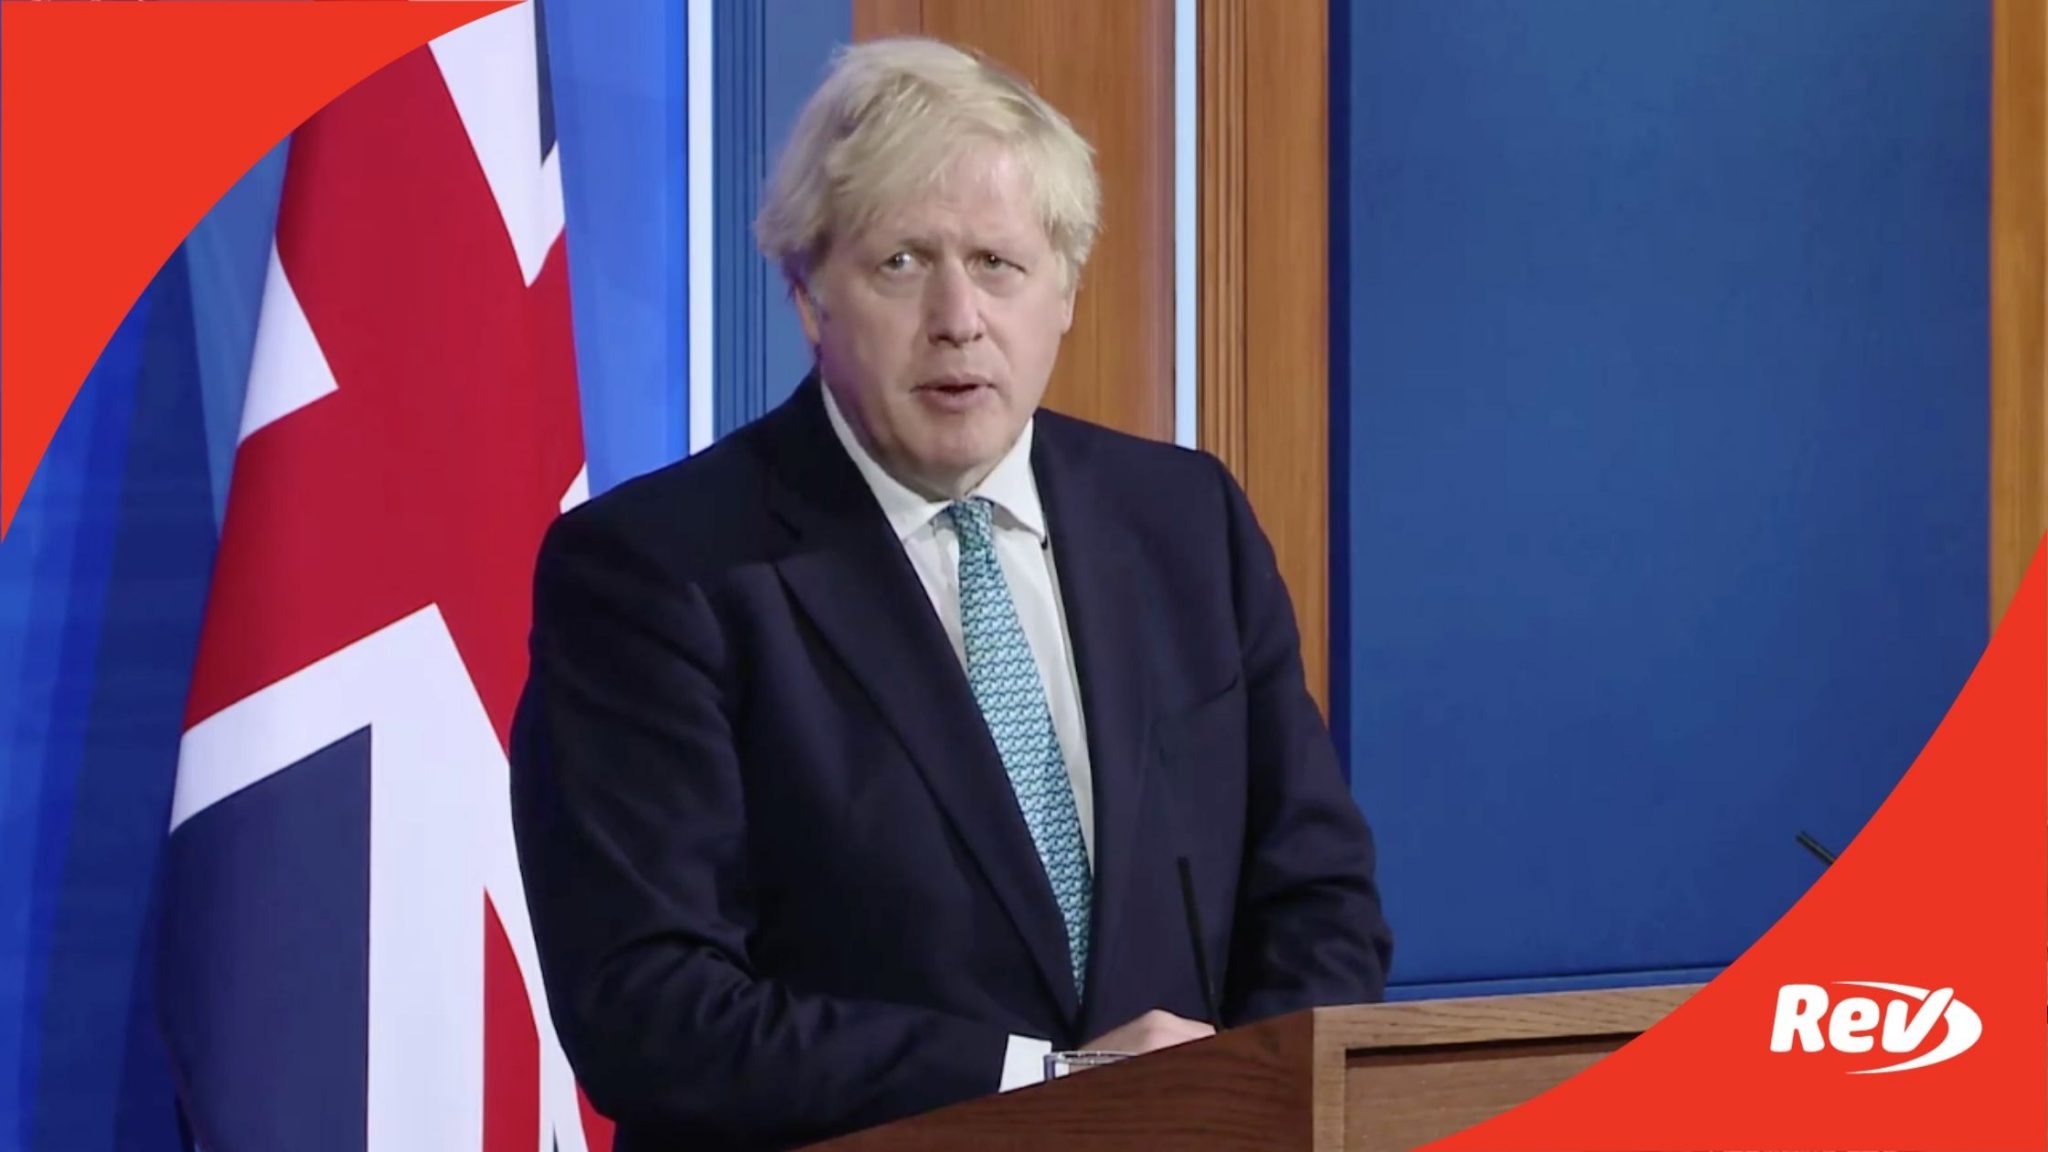 UK Prime Minister Boris Johnson COVID-19 Press Conference Transcript May 14